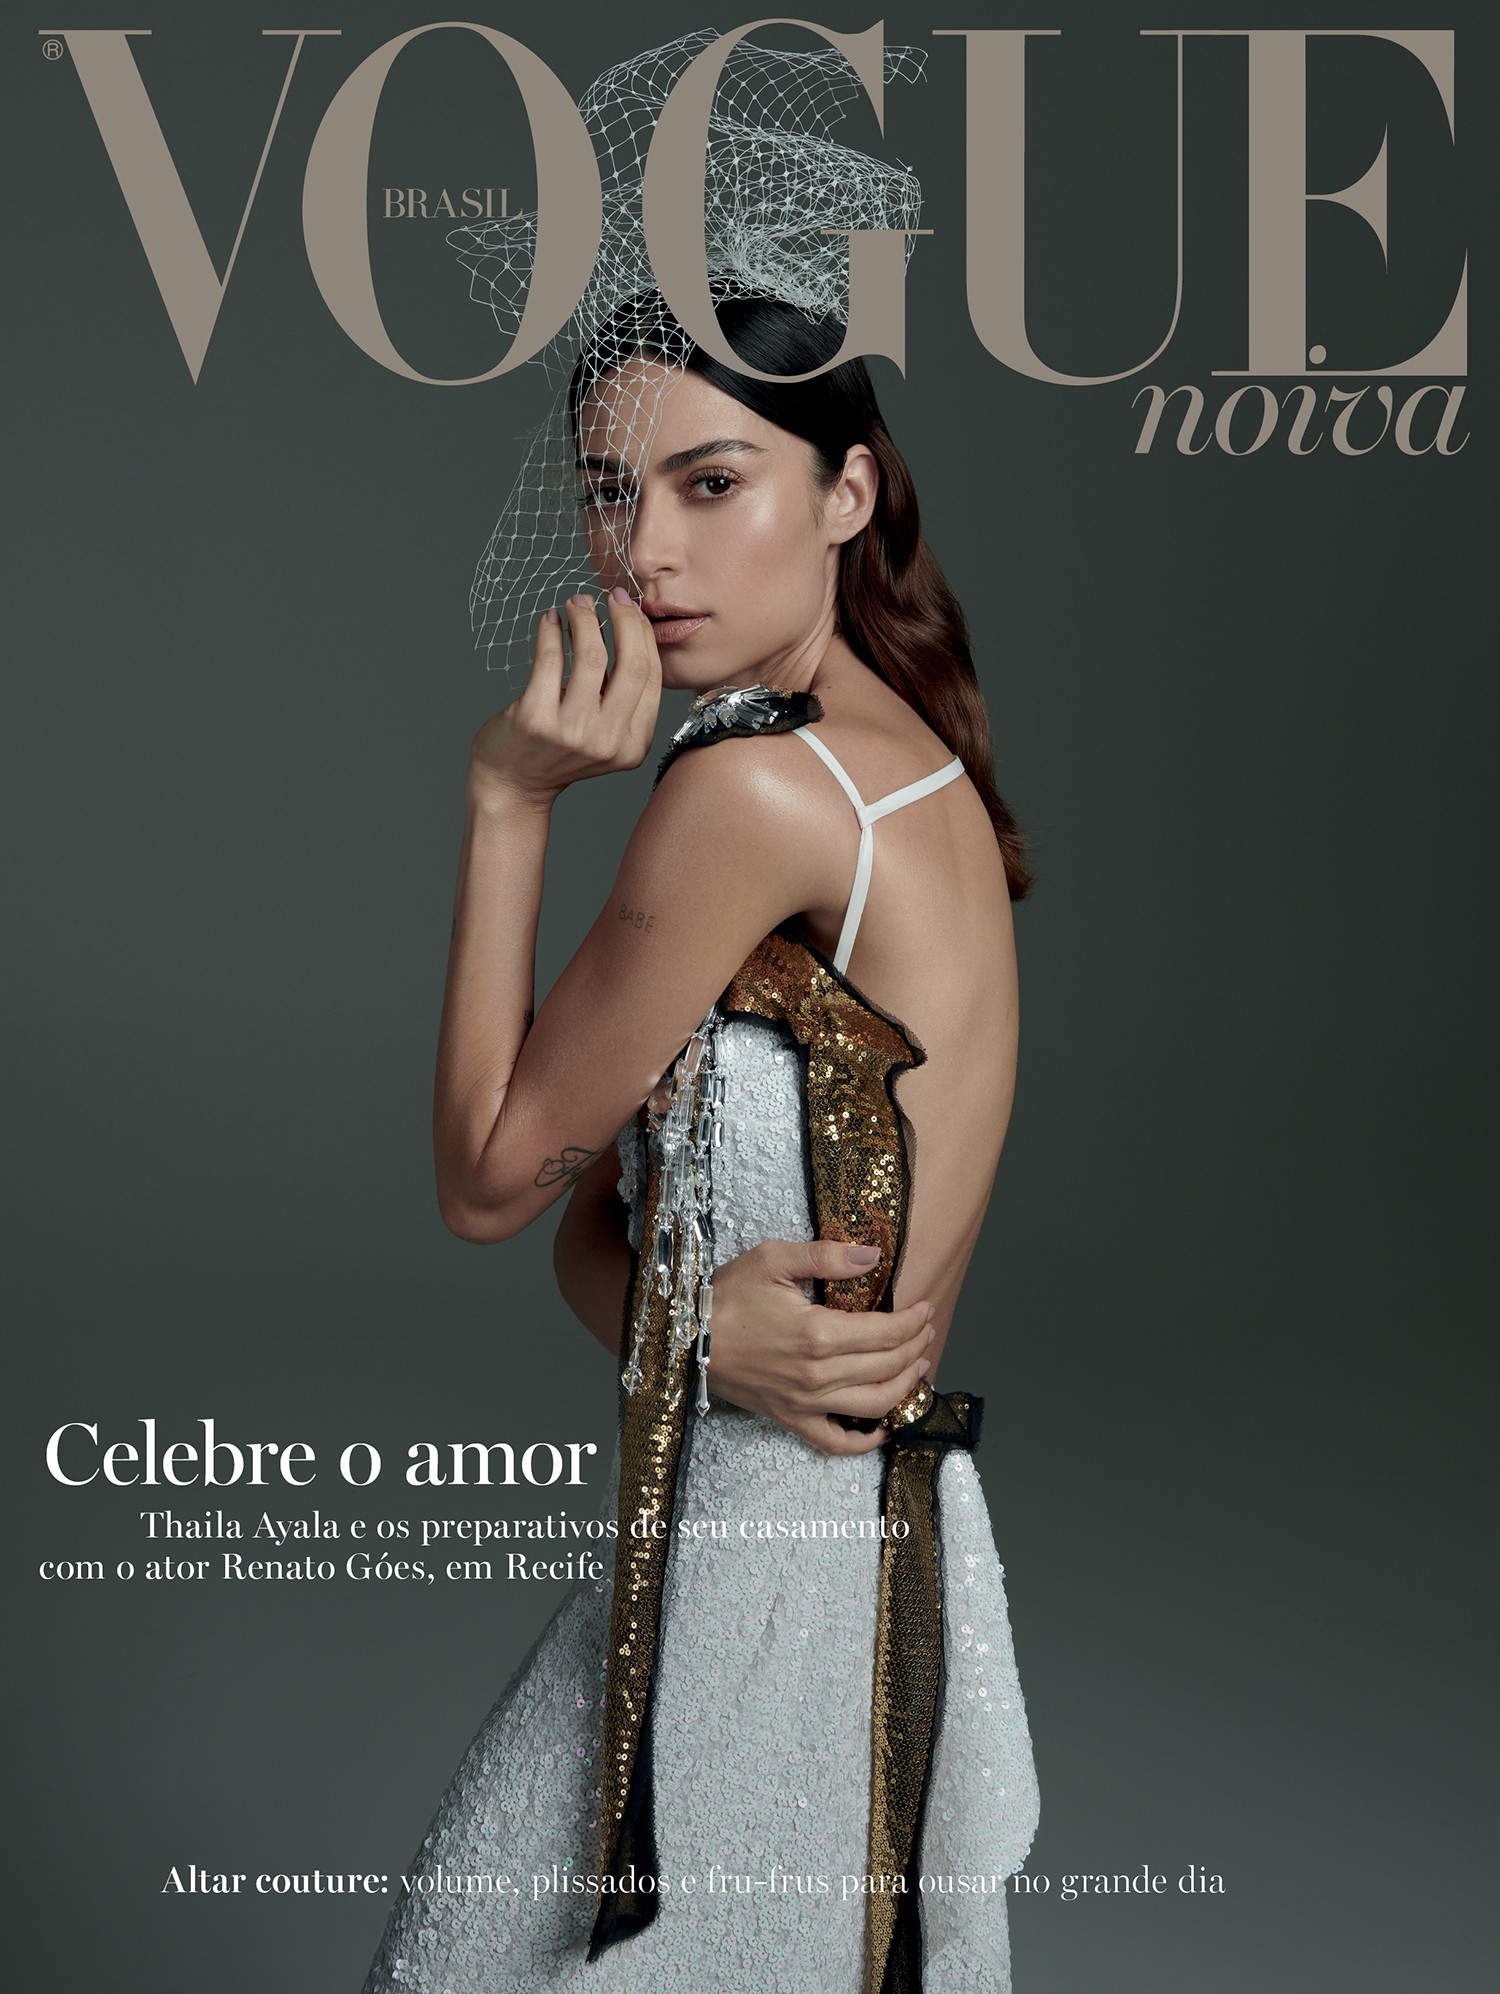 Vogue Noiva com Thaila Ayala (Foto: Vogue Brasil)